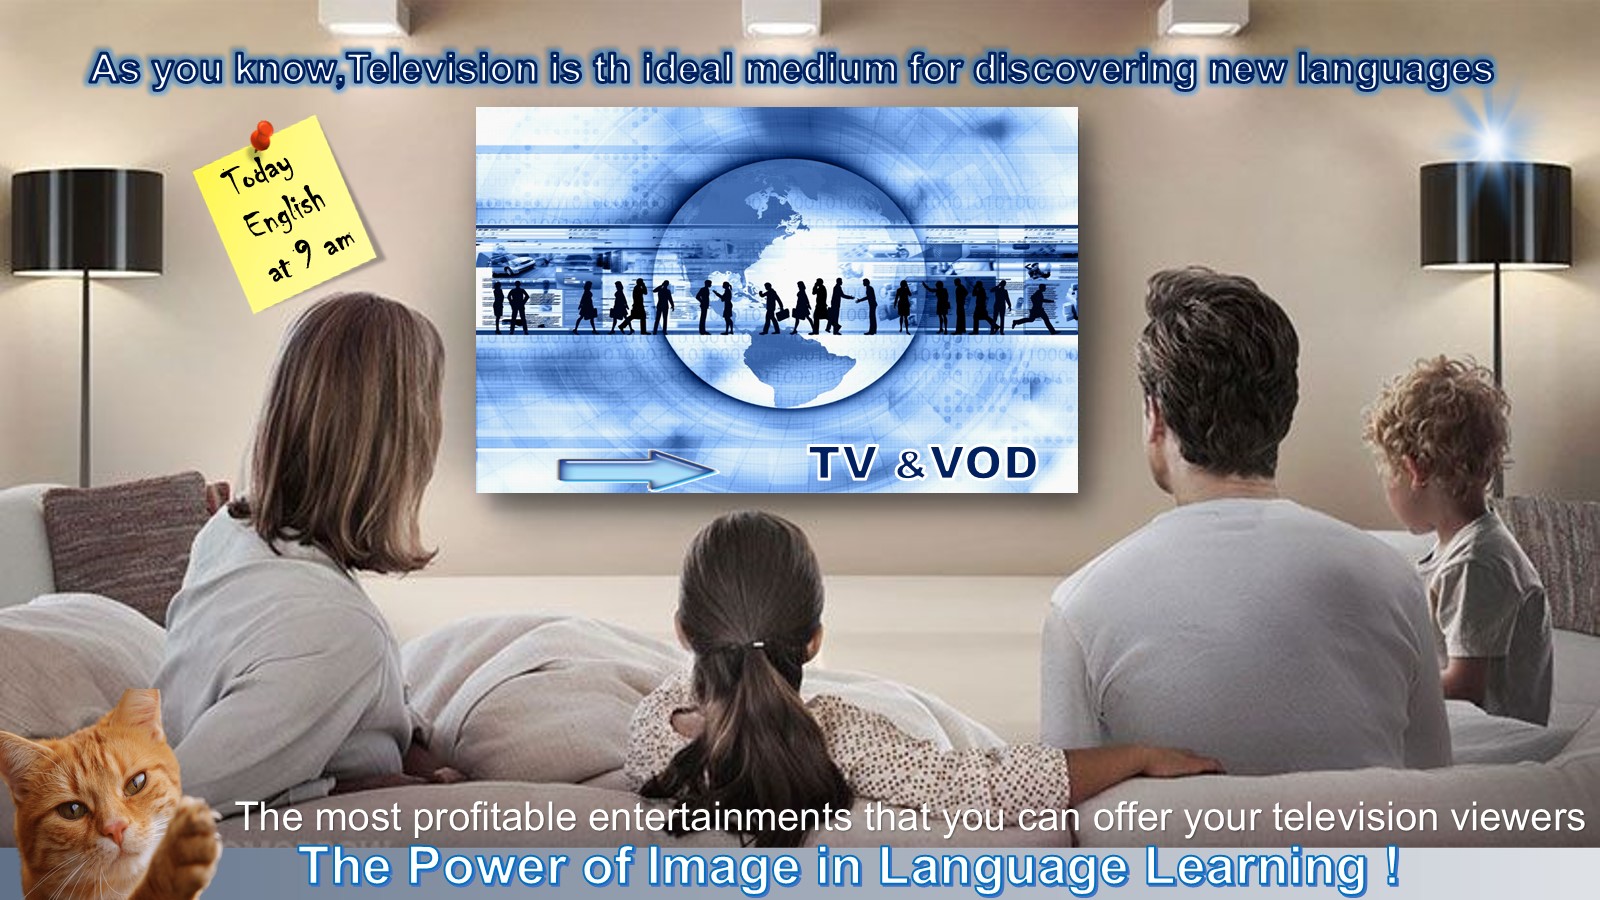 The most profitable entertainments TV an VOD